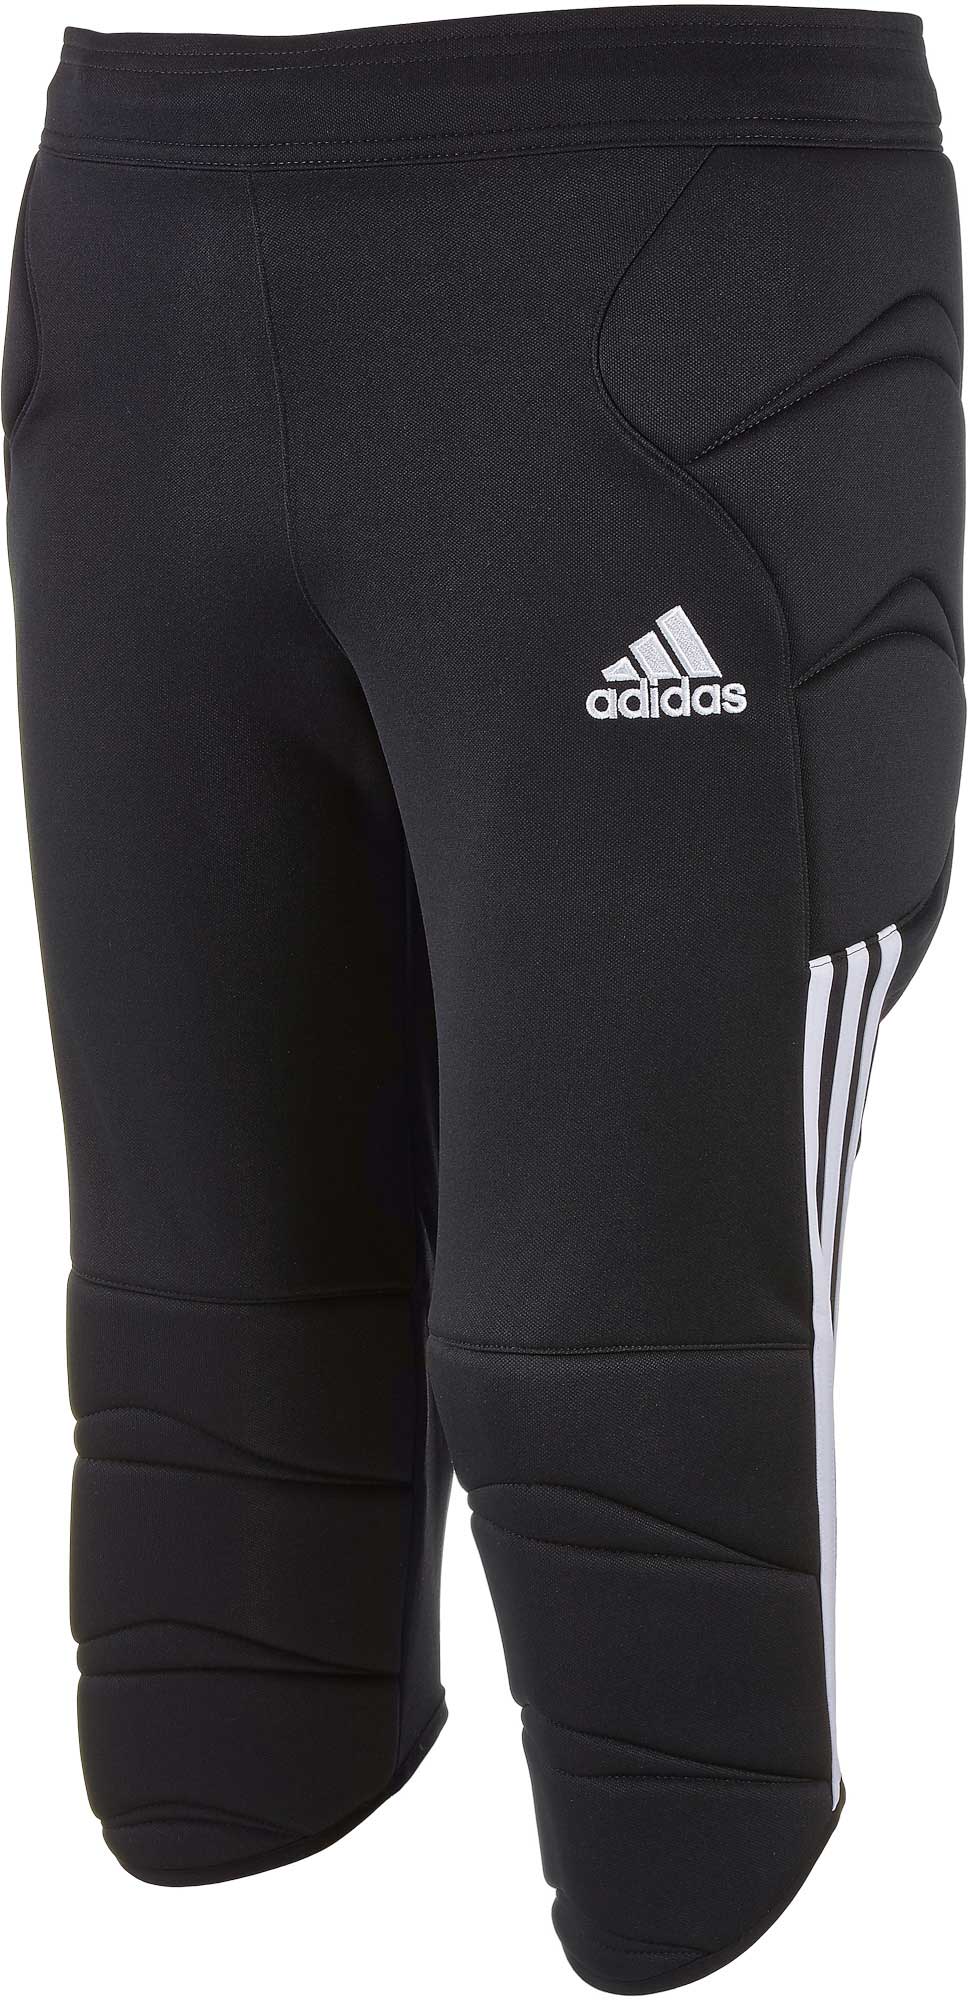 adidas soccer goalie pants